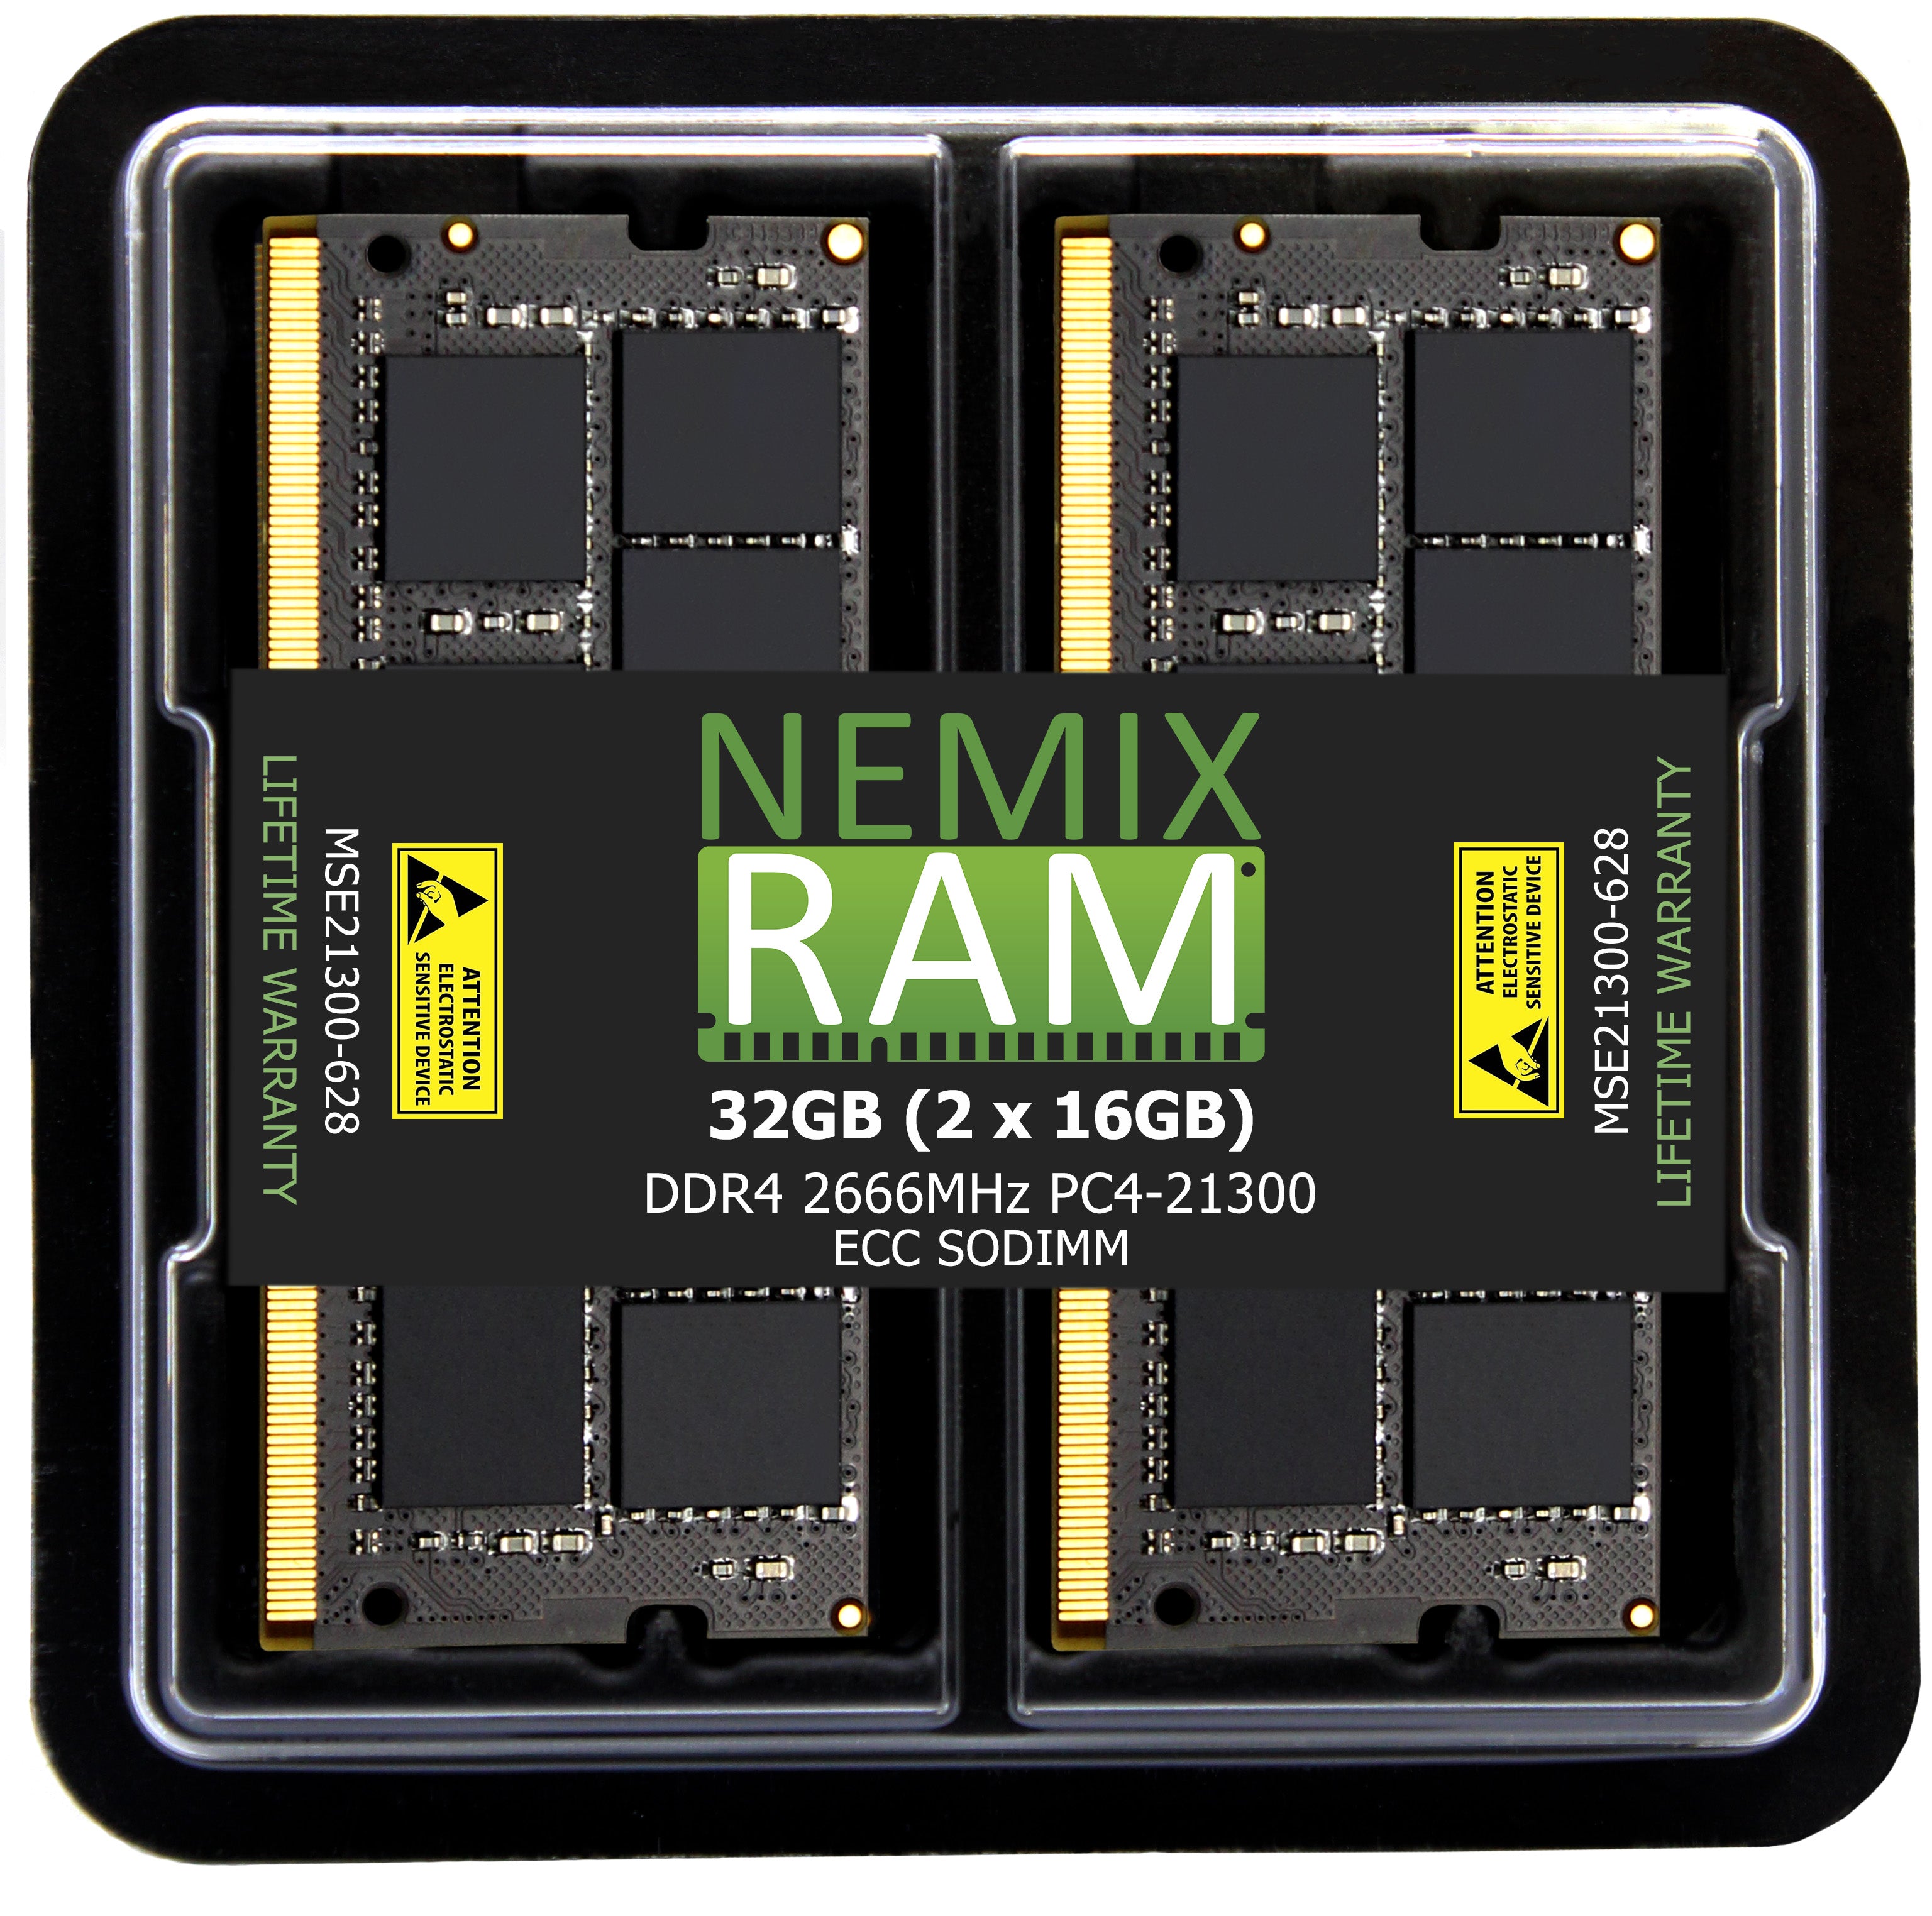 NEMIX RAM Memory Upgrade equivalent to ASUSTOR AS-16GECD4 92M11-S16ECD40 ECC SODIMM Memory Module